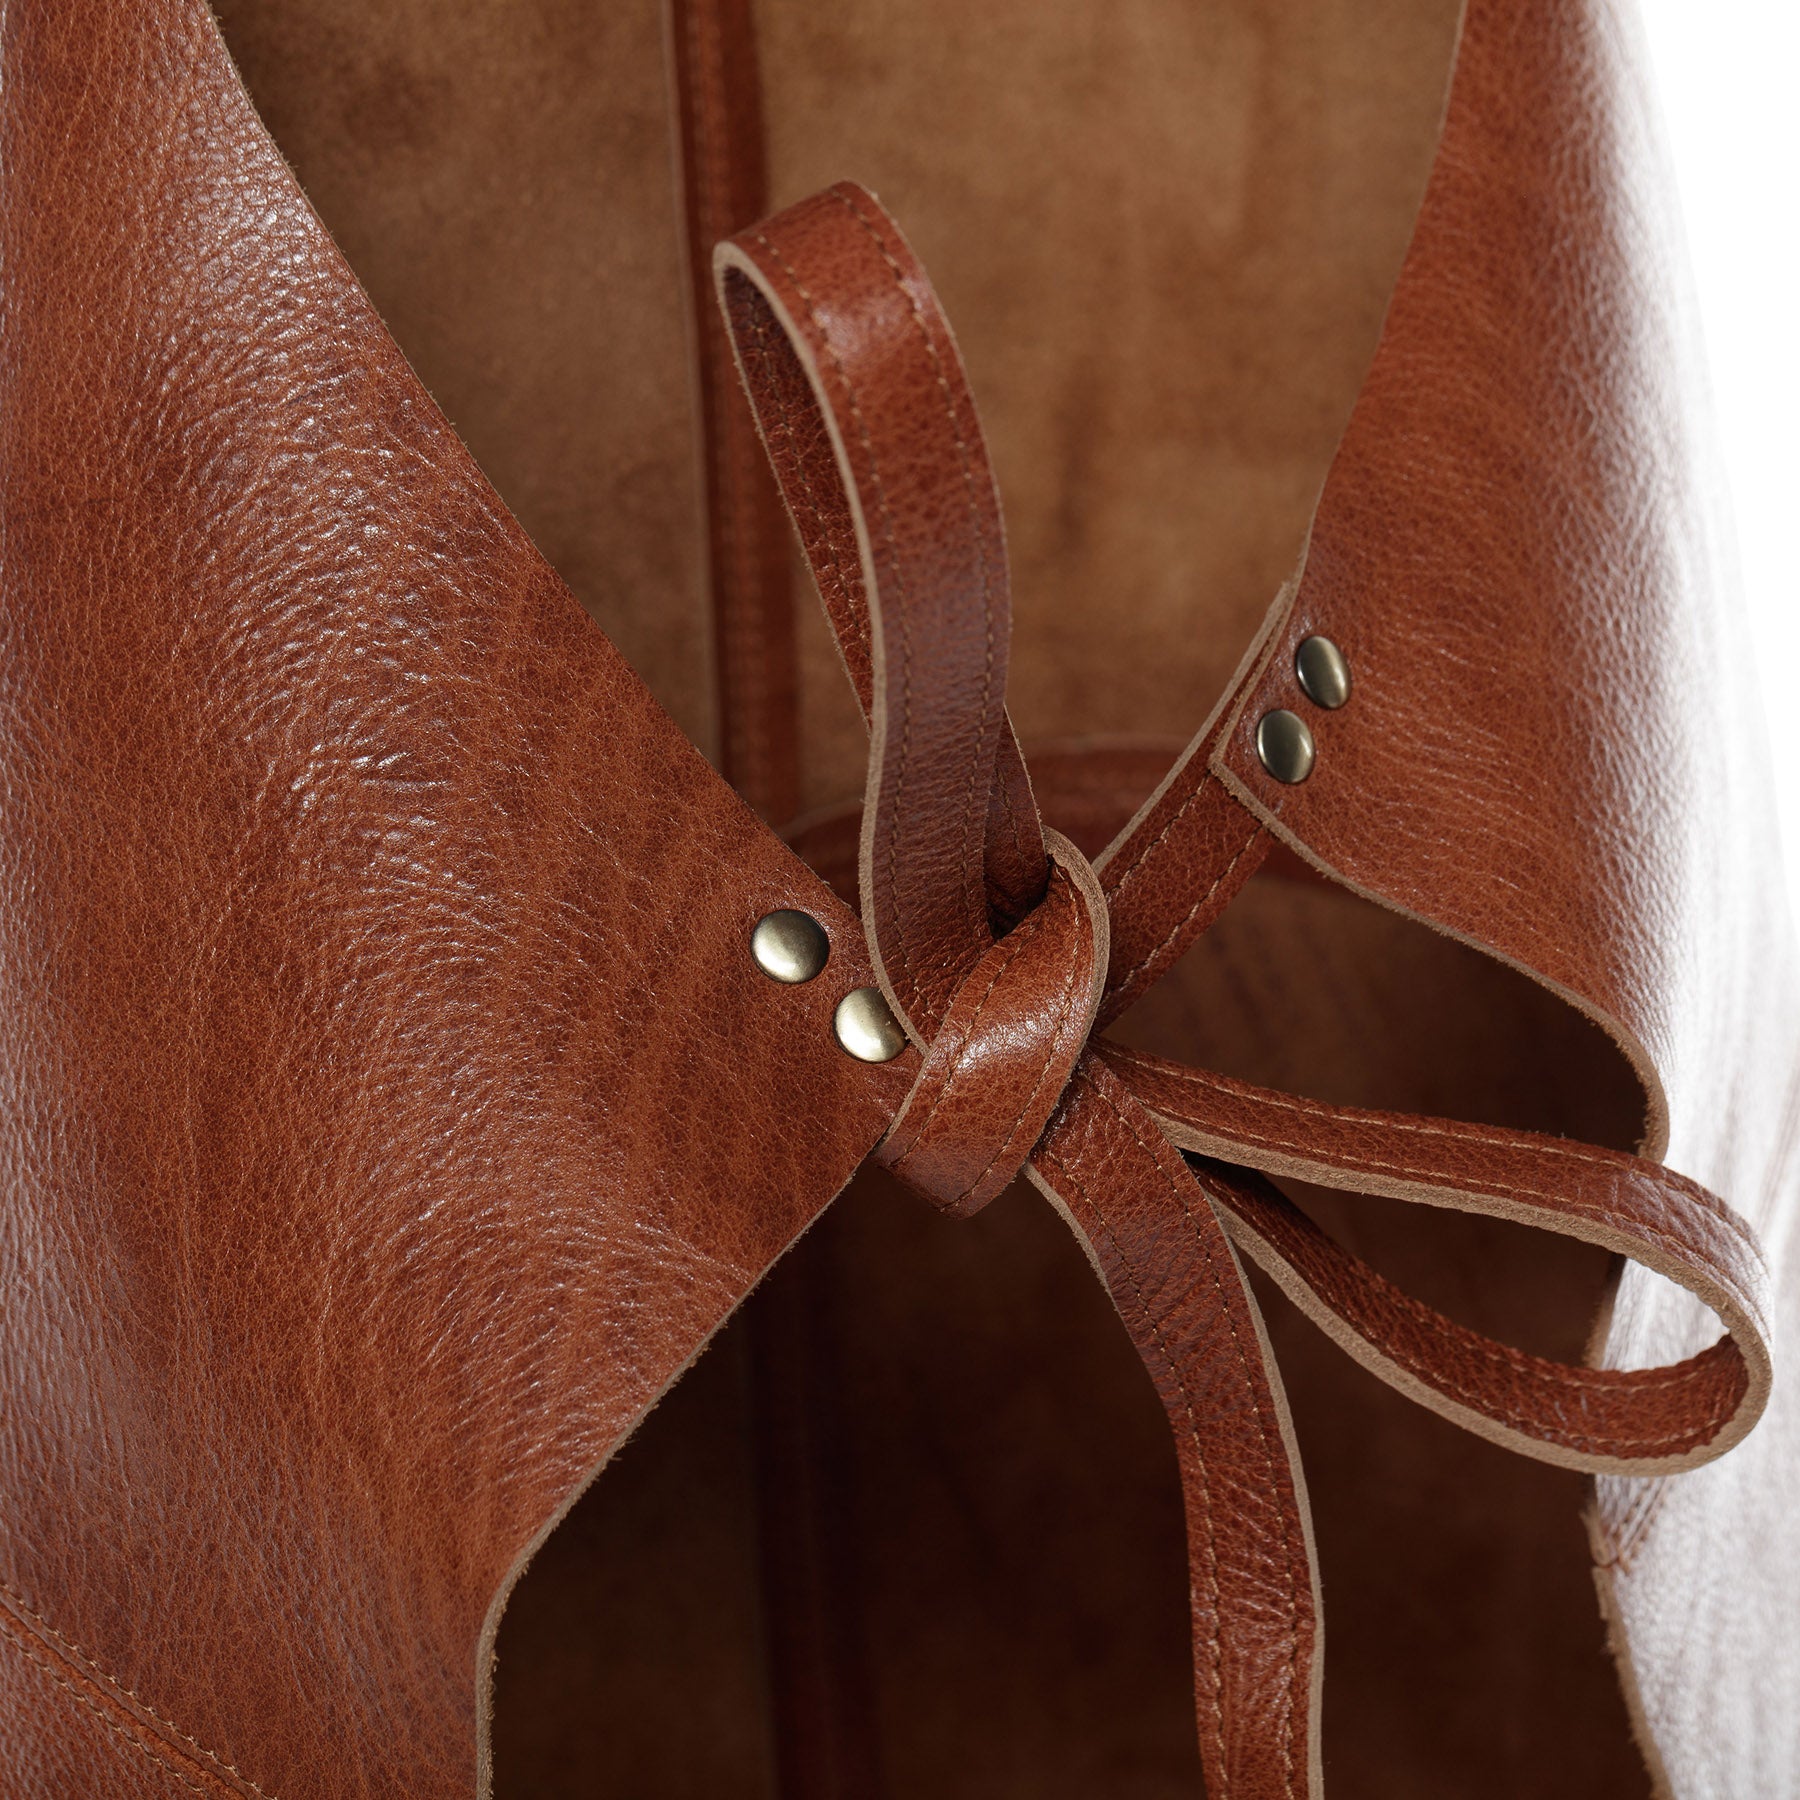 Leather apron HEATHROW vintage leather brown